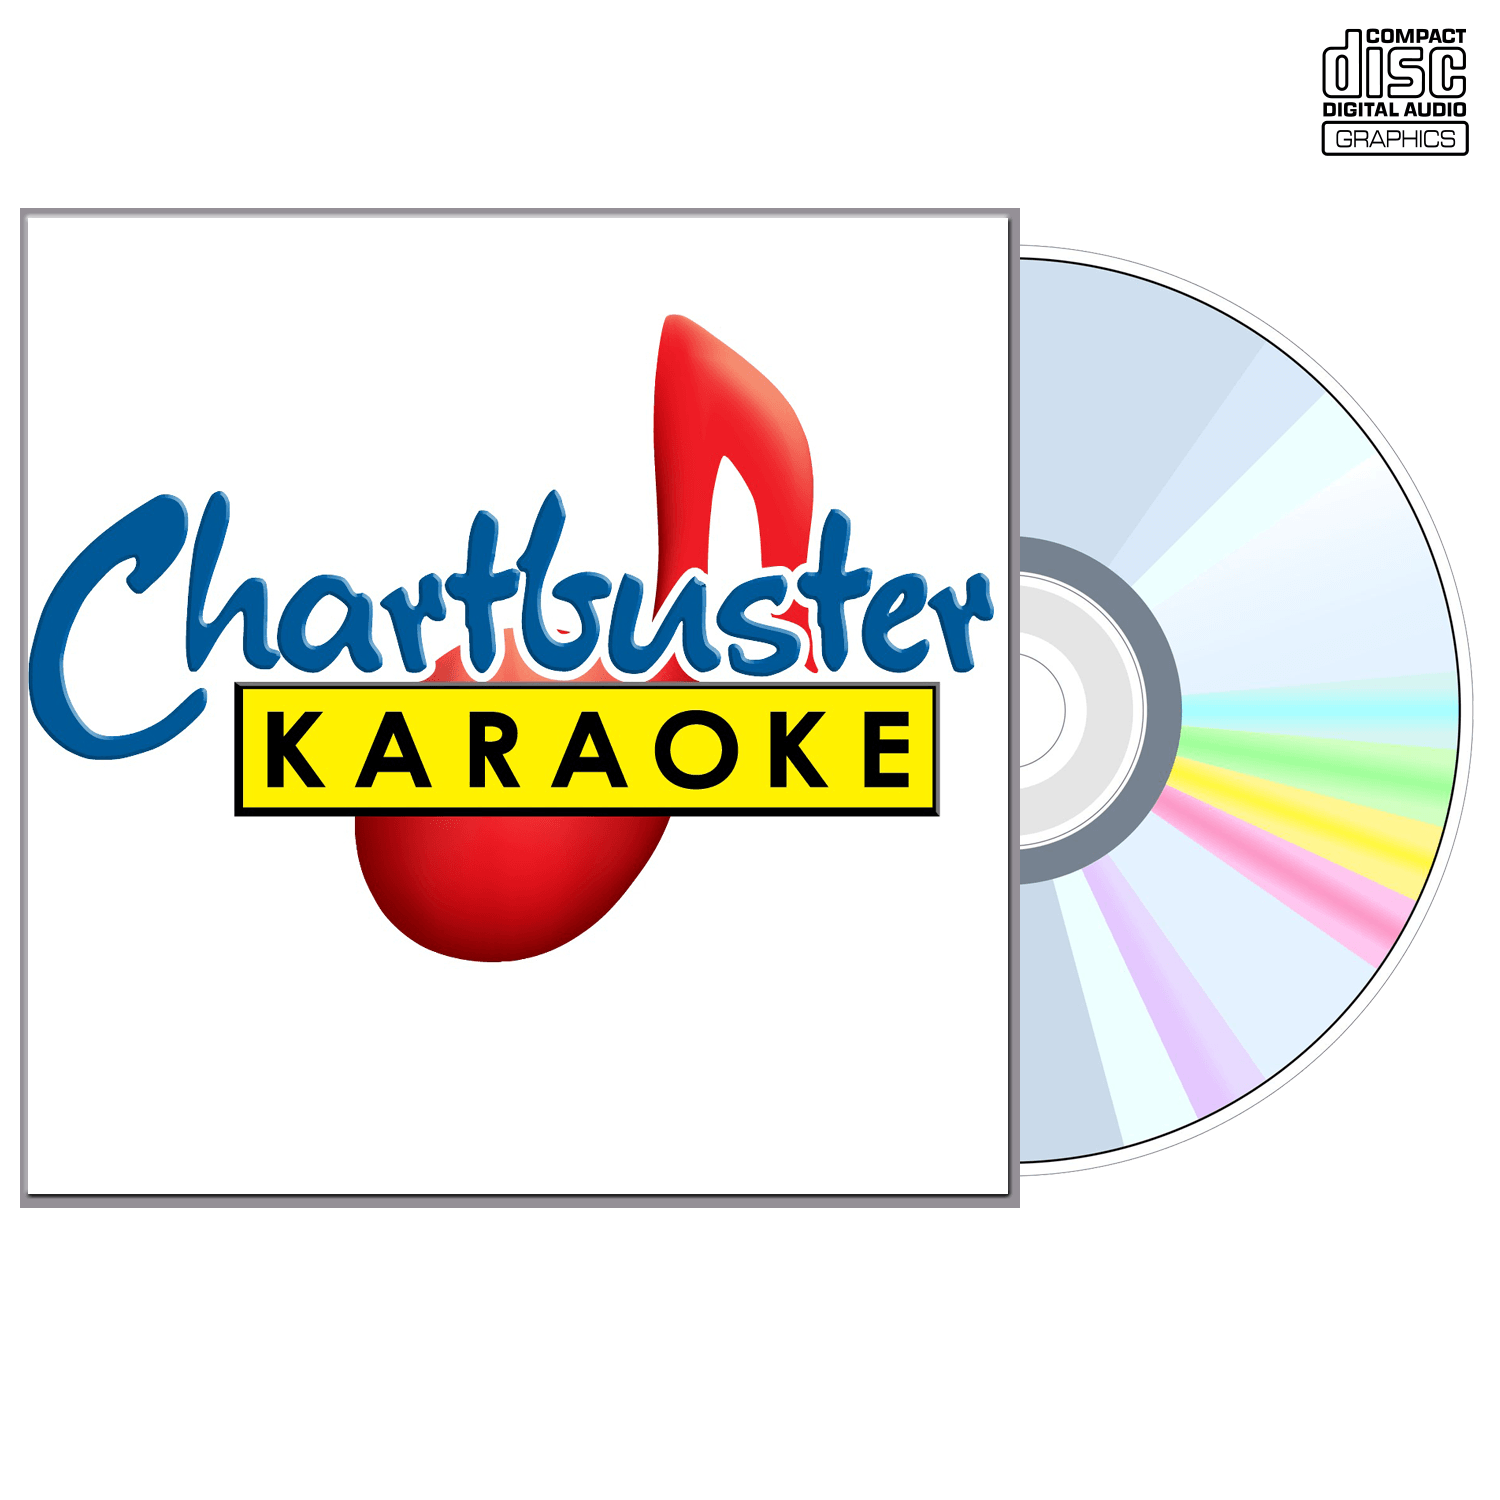 Alan Jackson Vol 1 - CD+G - Chartbuster Karaoke - Karaoke Home Entertainment